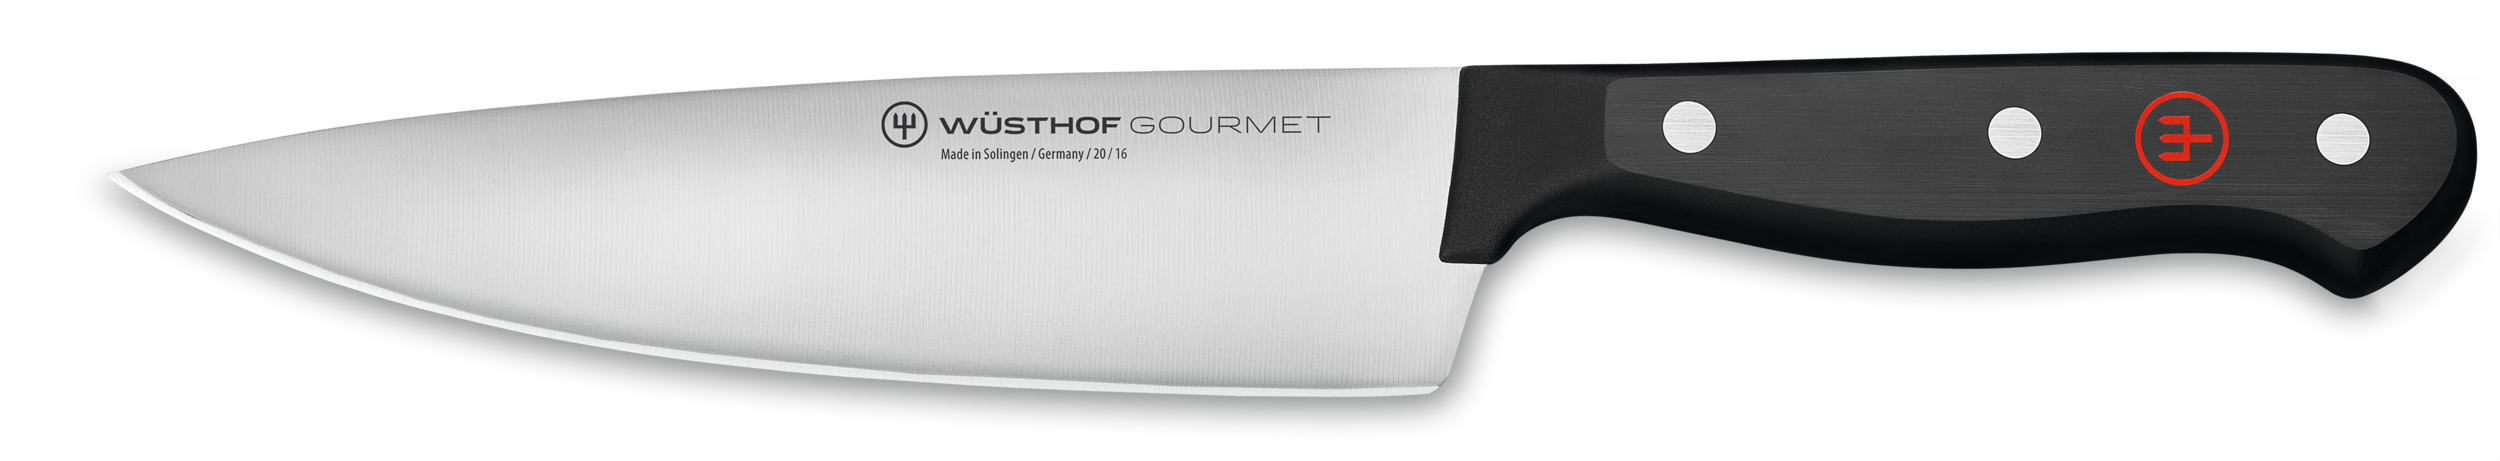 Wüsthof Gourmet 12-Piece Knife Block Set